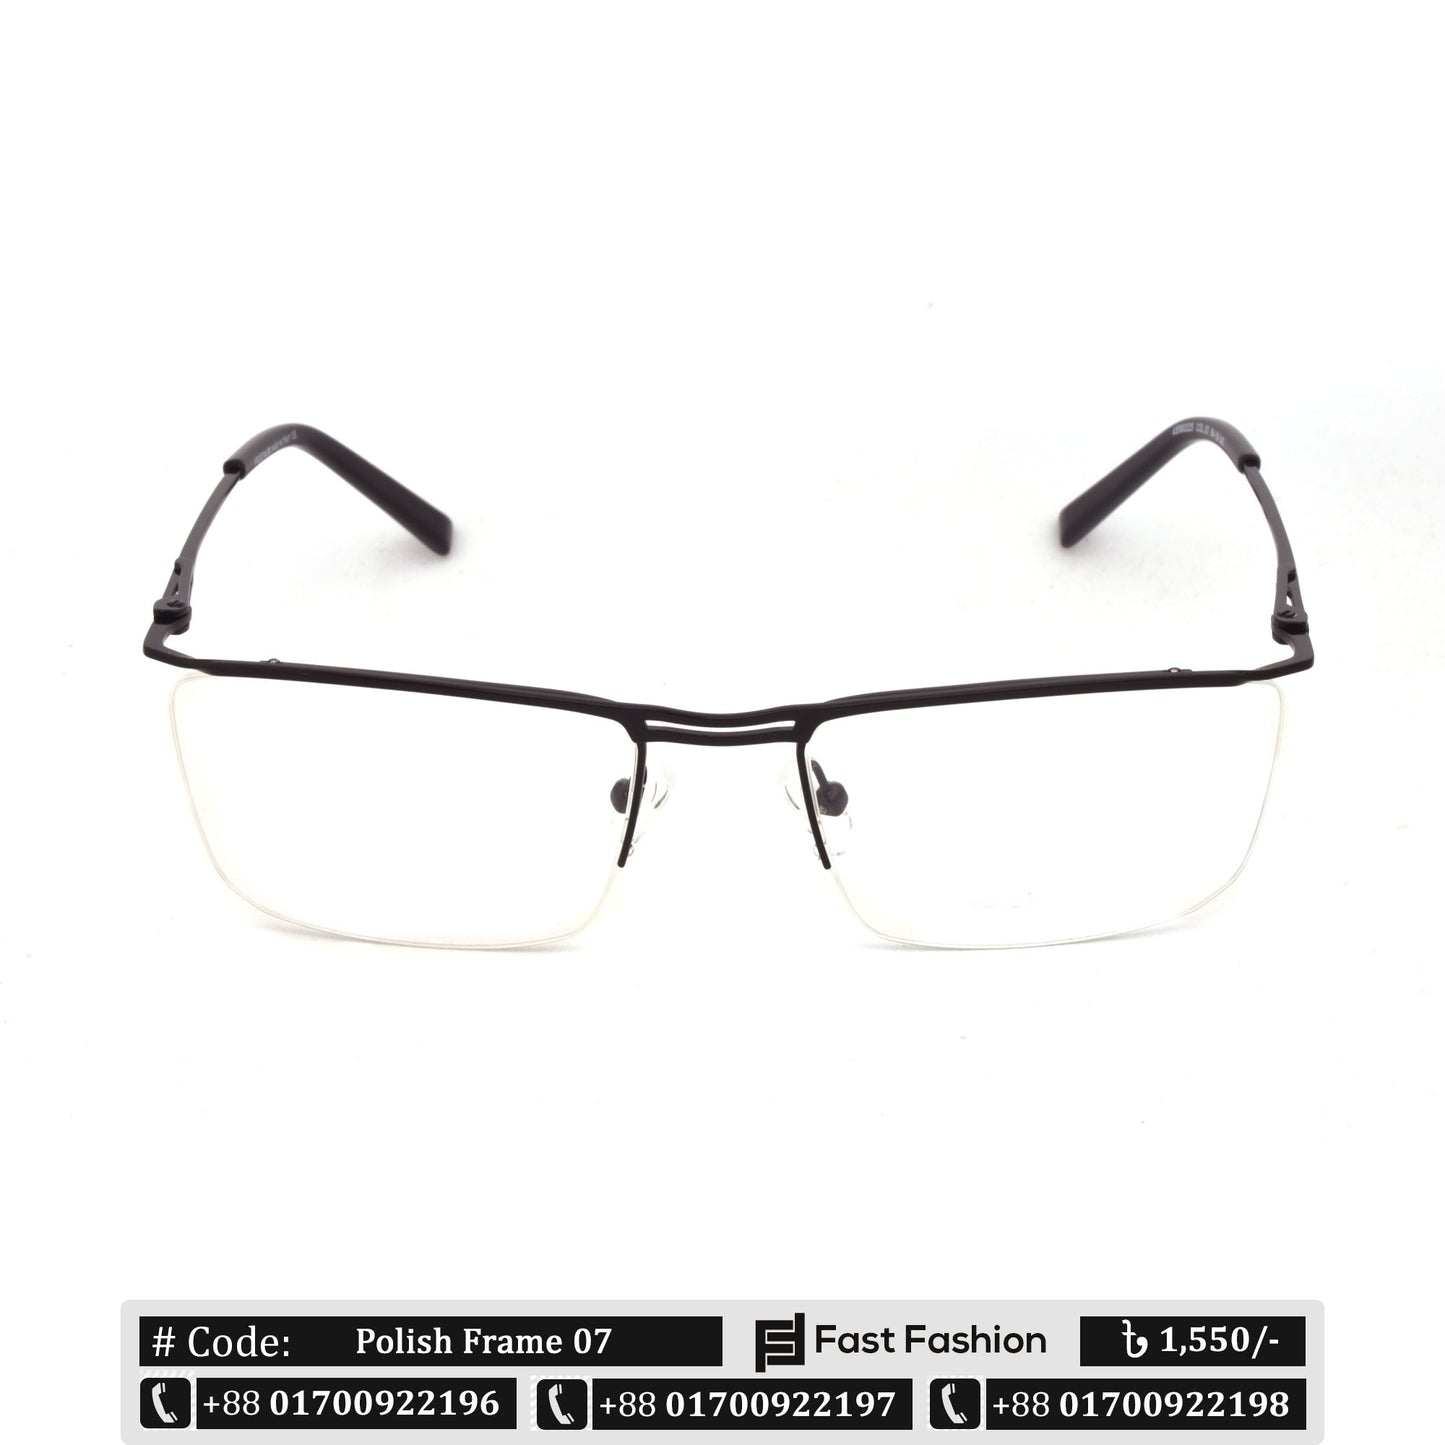 Trendy Stylish Optic Frame | Polish Frame 07 | Premium Quality